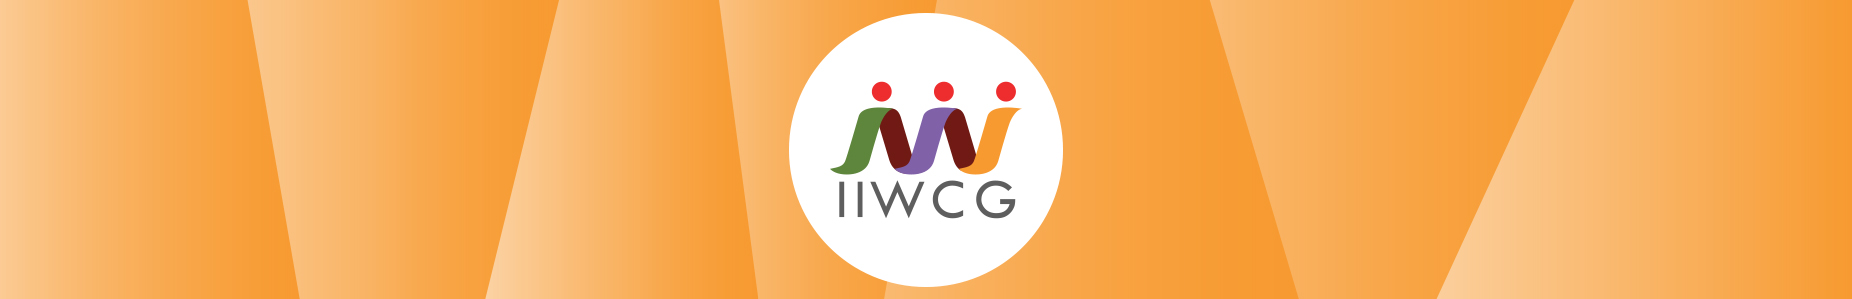 IIWCG Membership